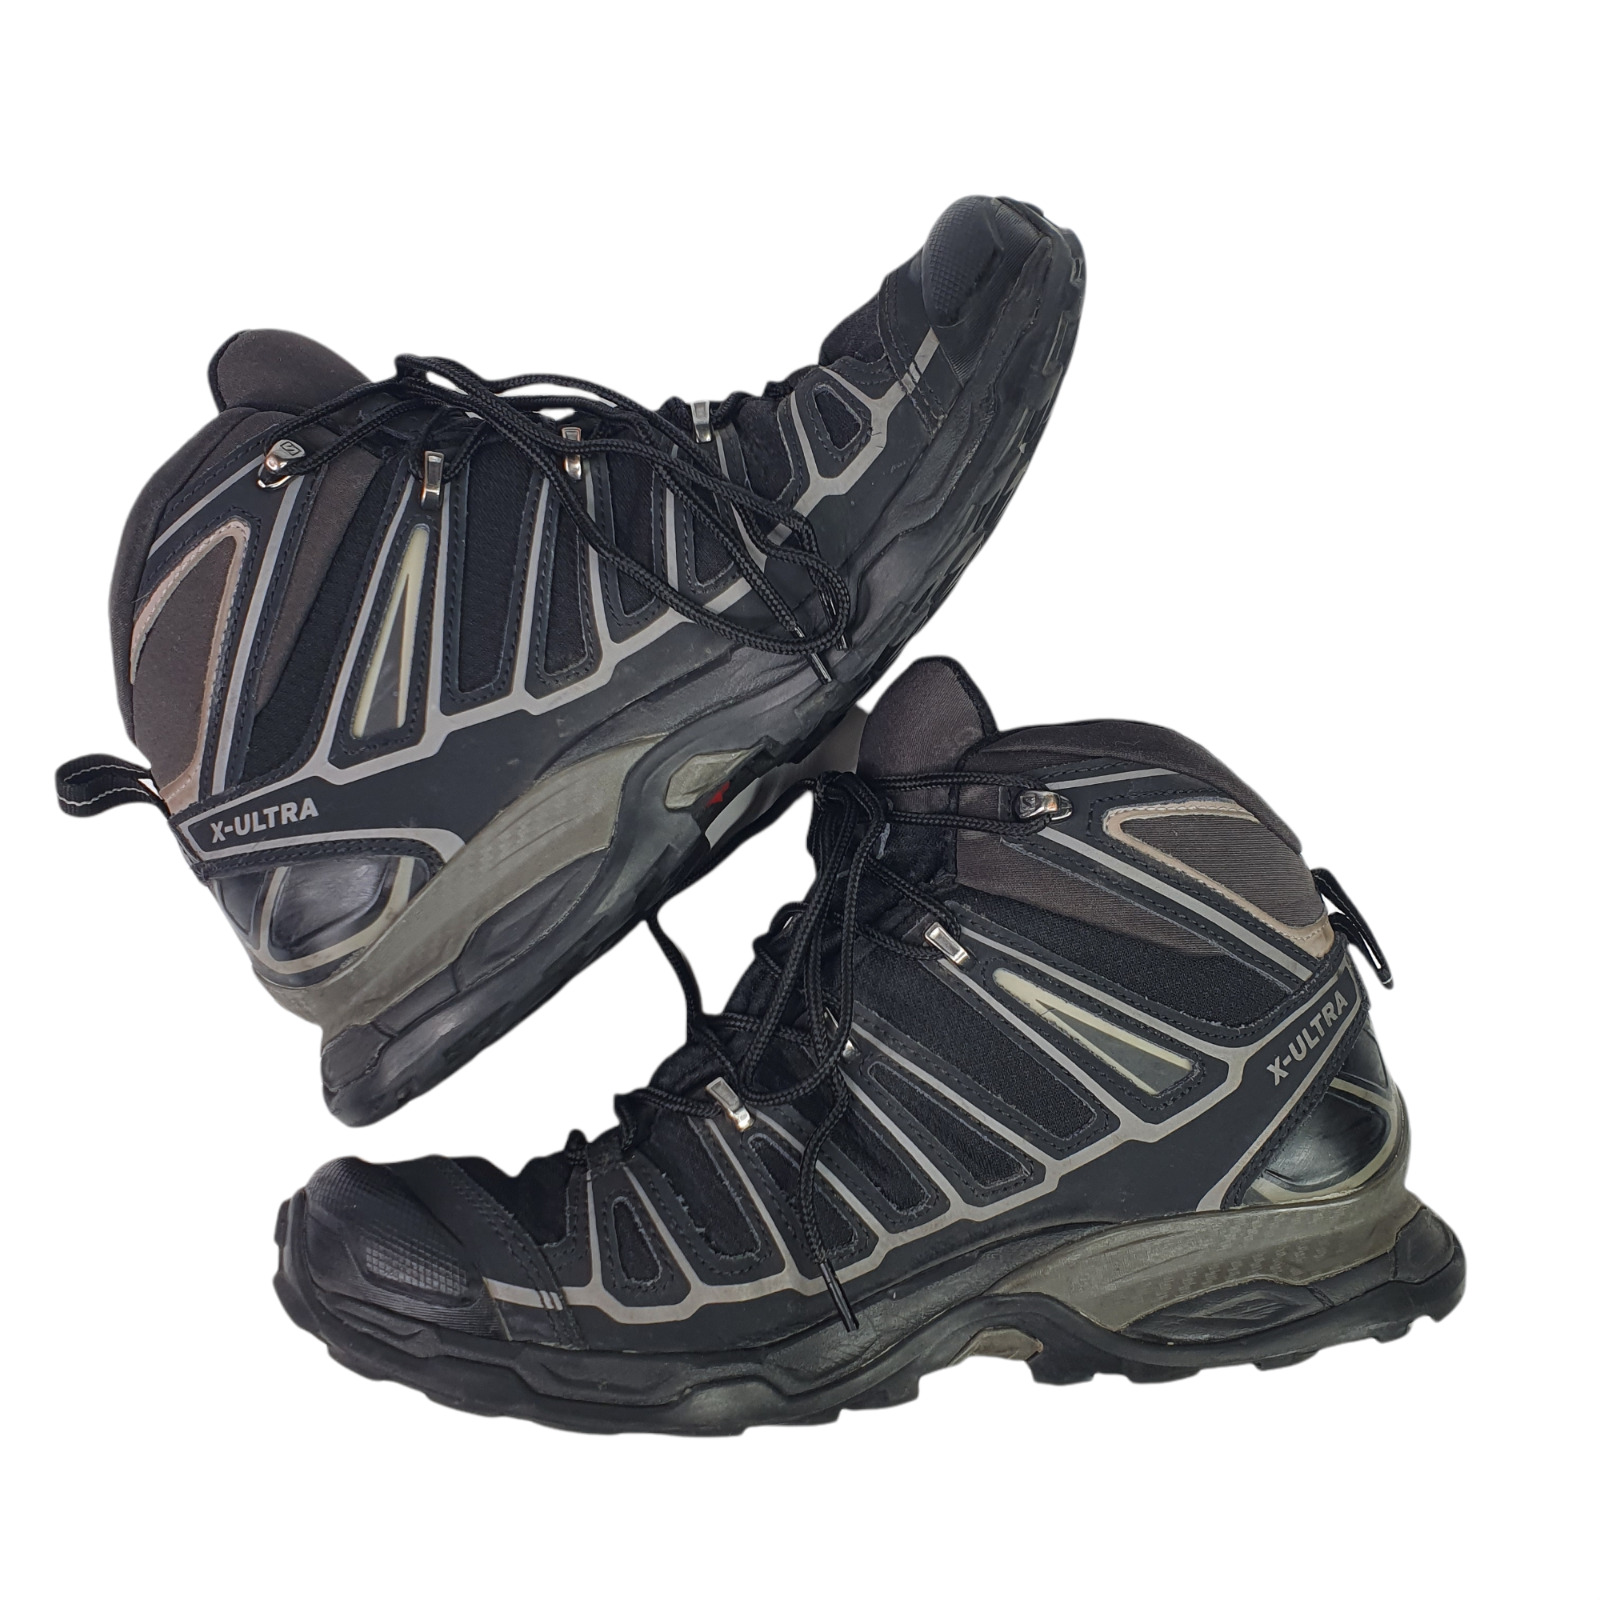 Salomon X Ultra Mid GTX Gore-Tex 370770 Men's Sz 8.5 Hiking Boots Shoes Black